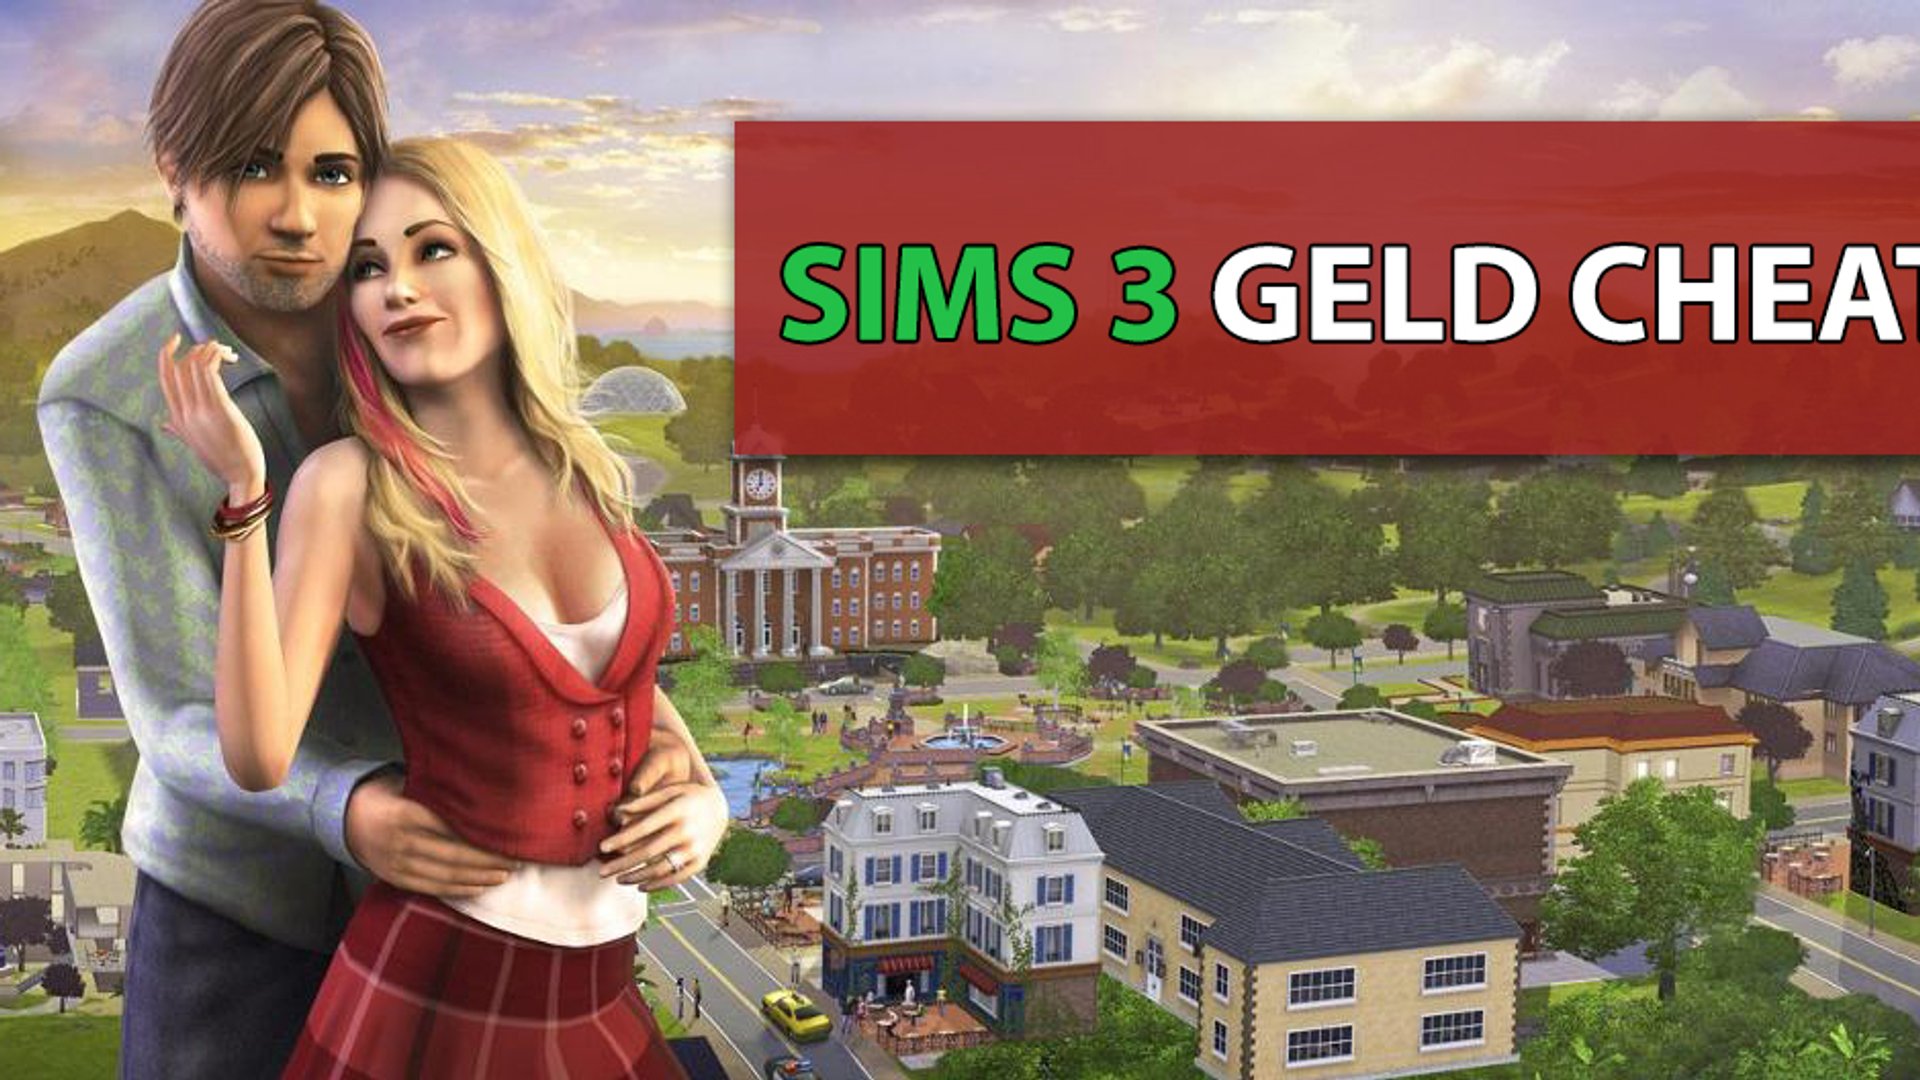 Verstelbaar graven Continentaal Sims 3 Geld Cheat: So bekommst du viele Simoleons!